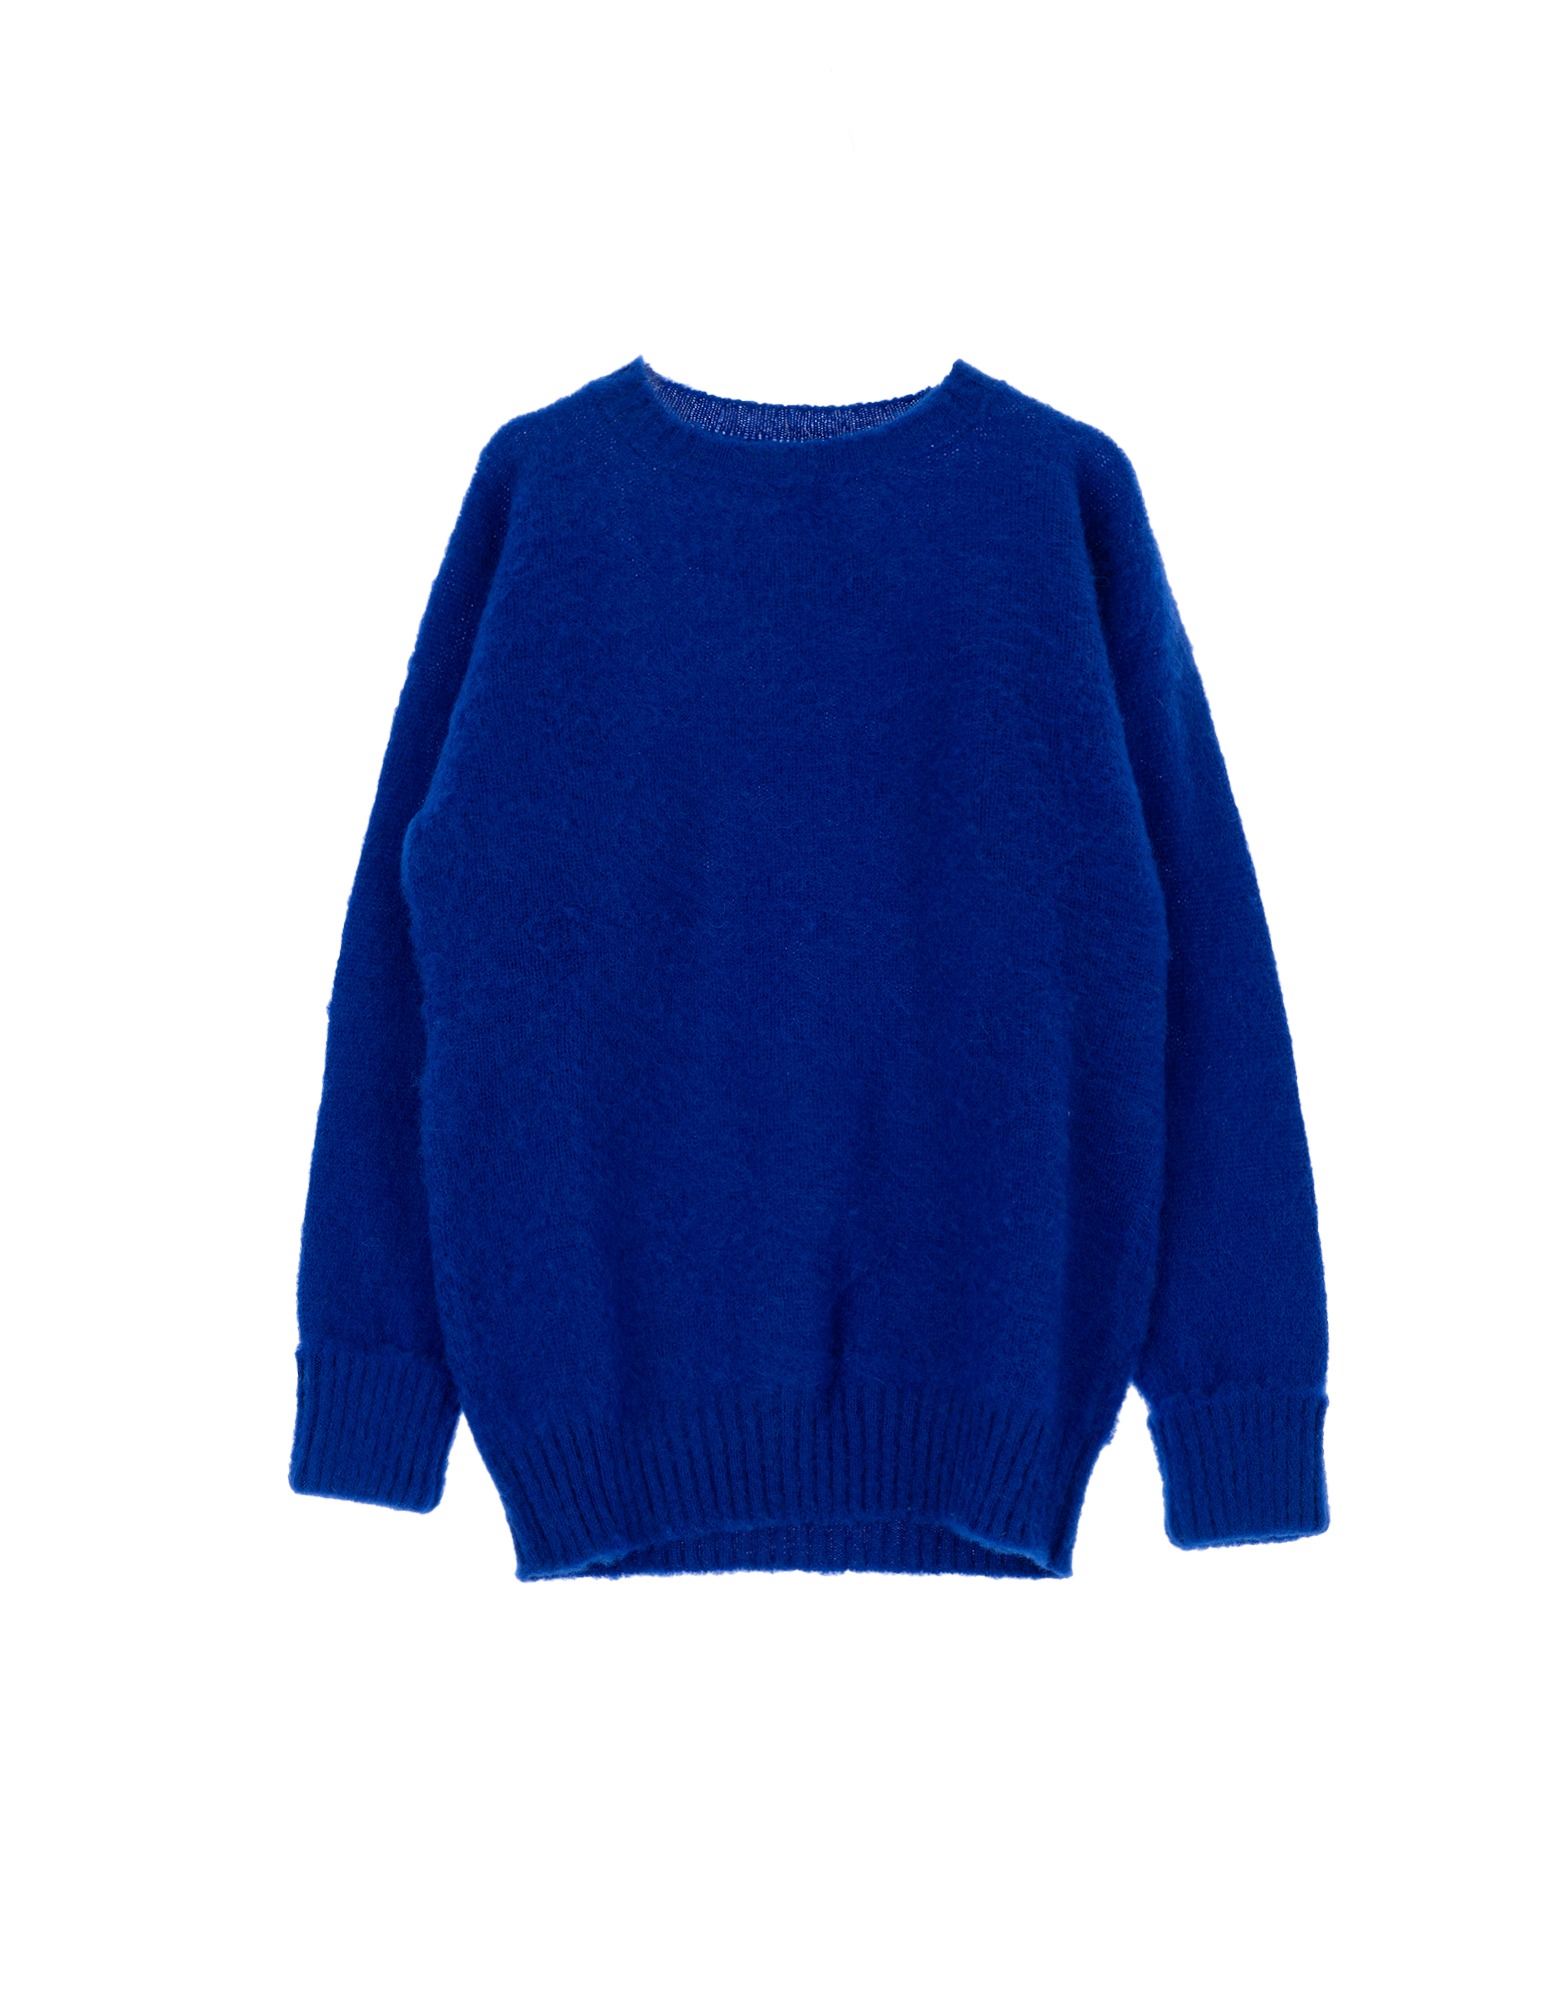 Shaggy Dog Sweater (Royal Blue)